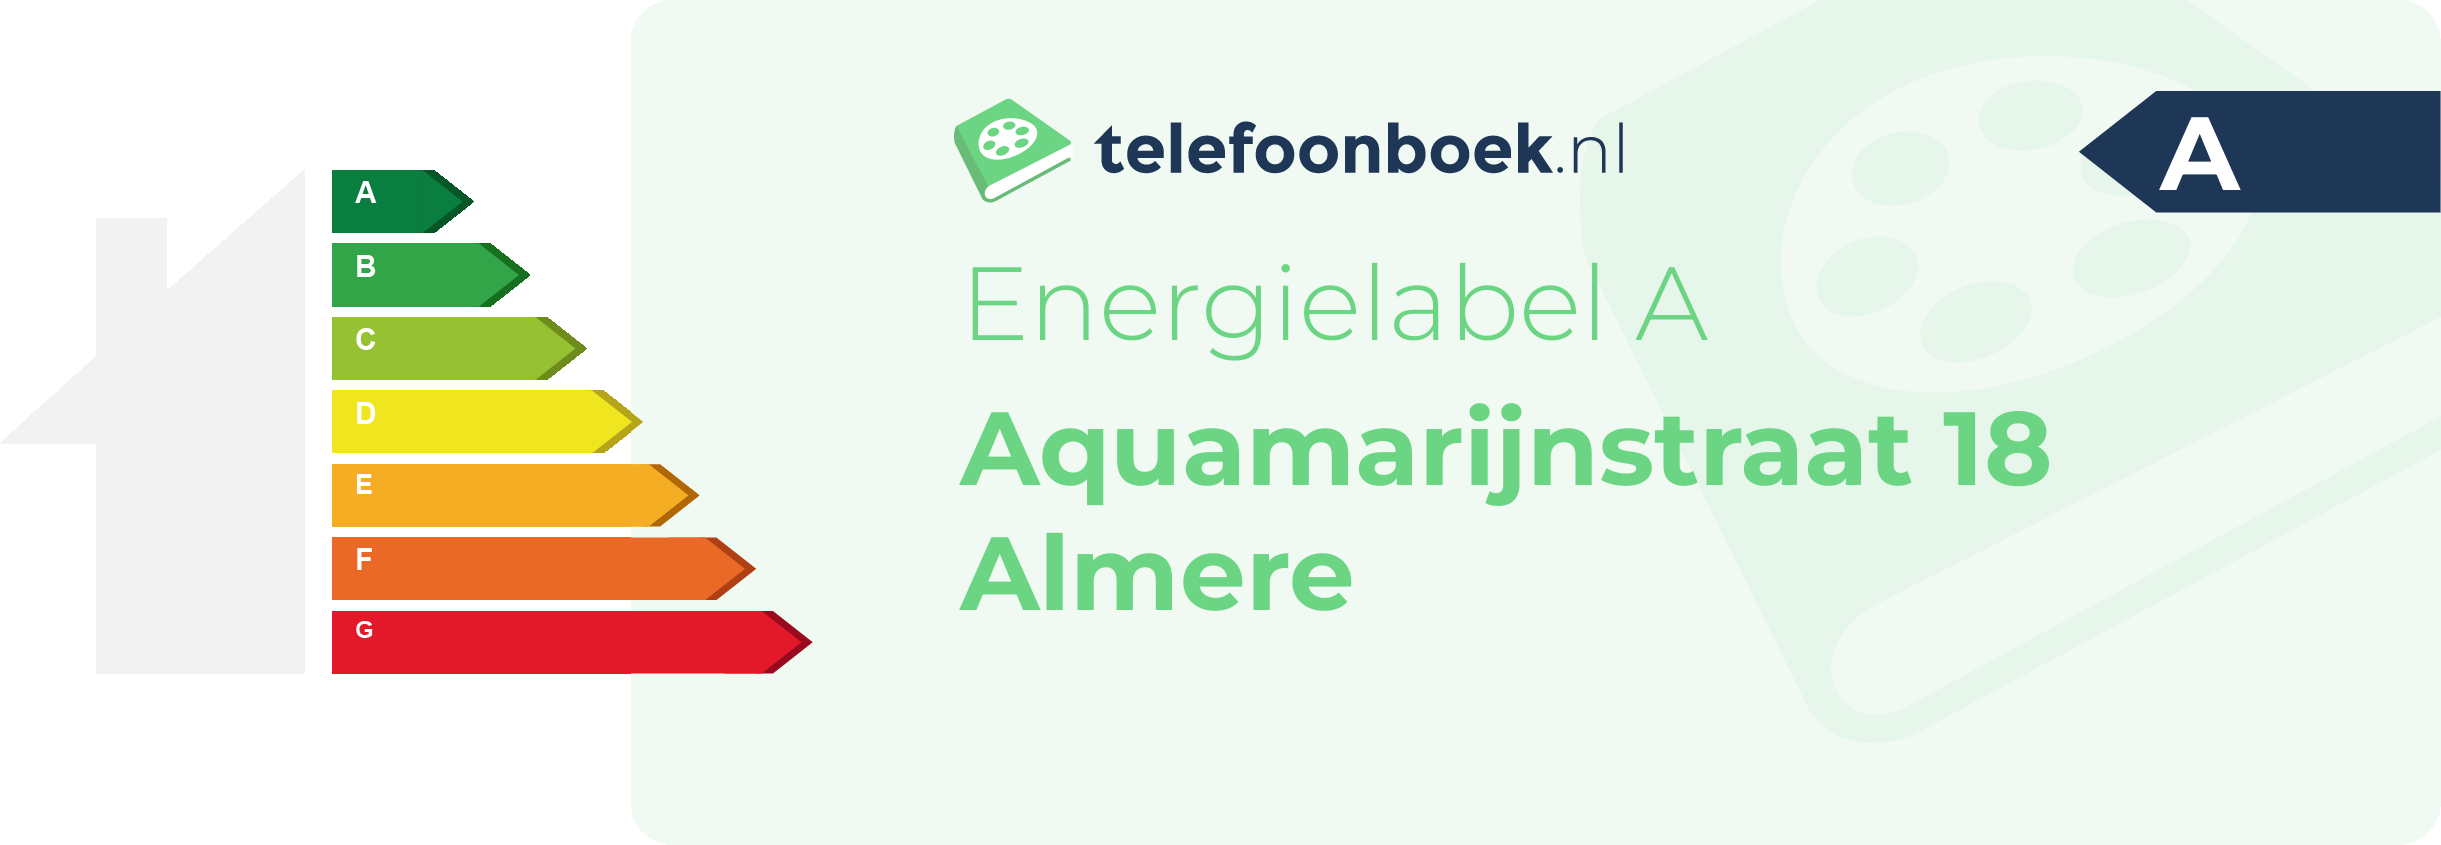 Energielabel Aquamarijnstraat 18 Almere